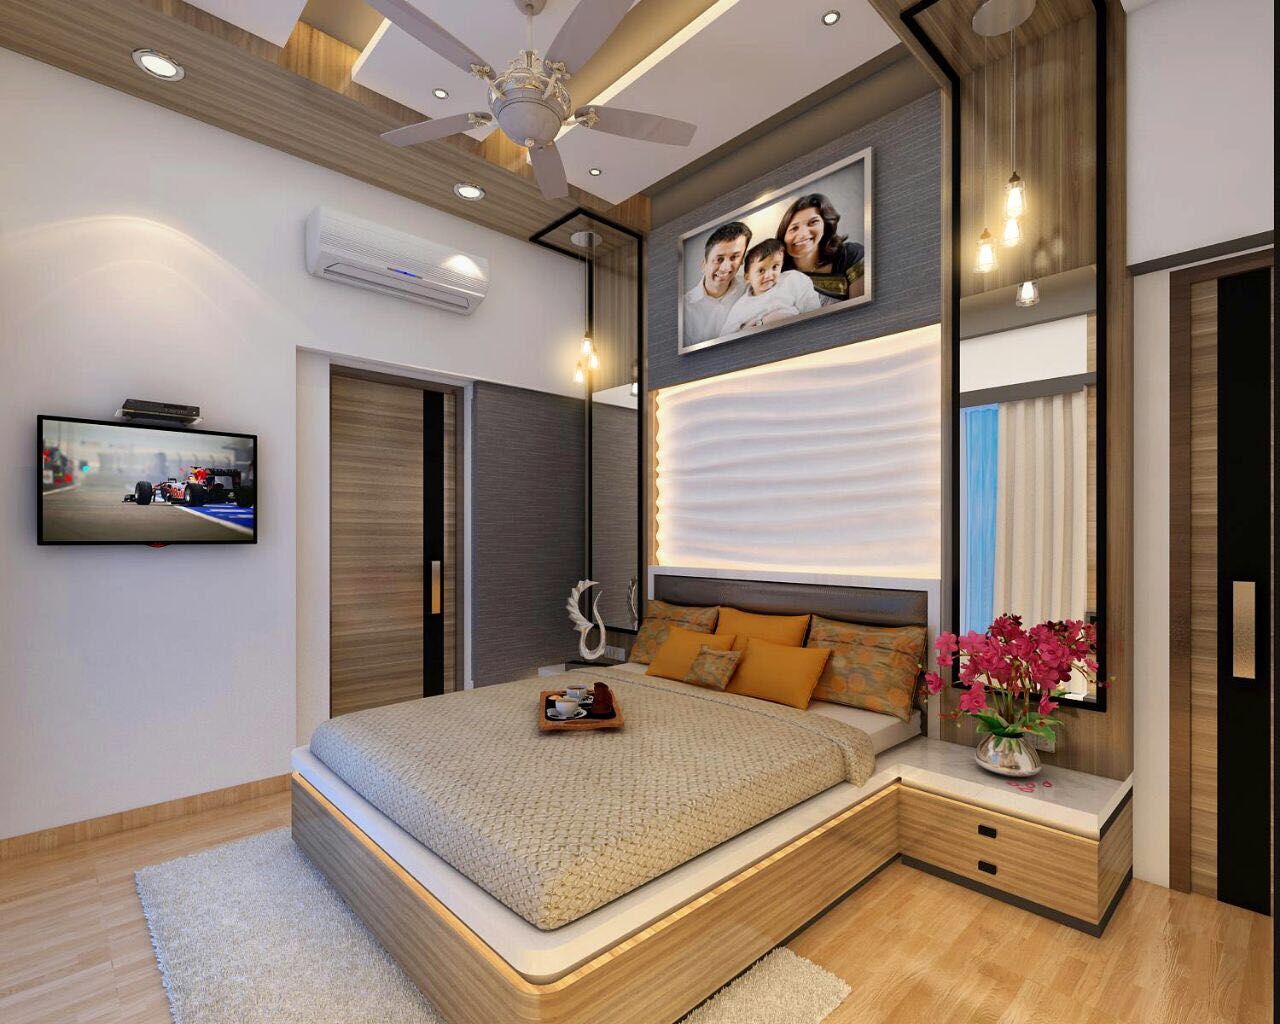 Bedroom Design Ideas Square 4 Design & Build Modern style bedroom